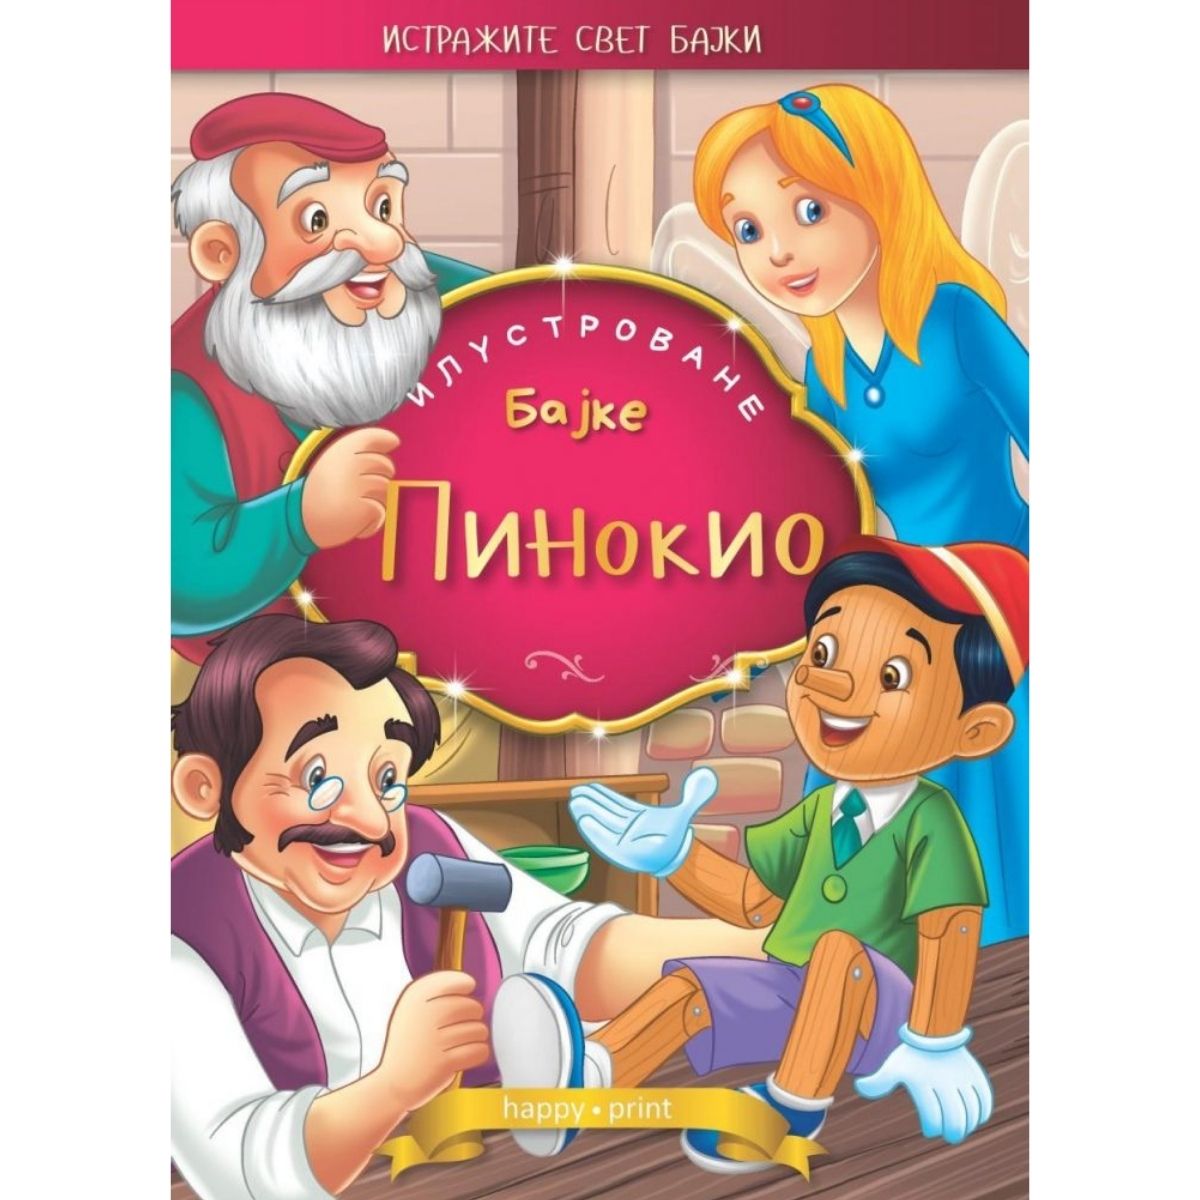 Pinokio slikovnica - ilustrovane bajke 